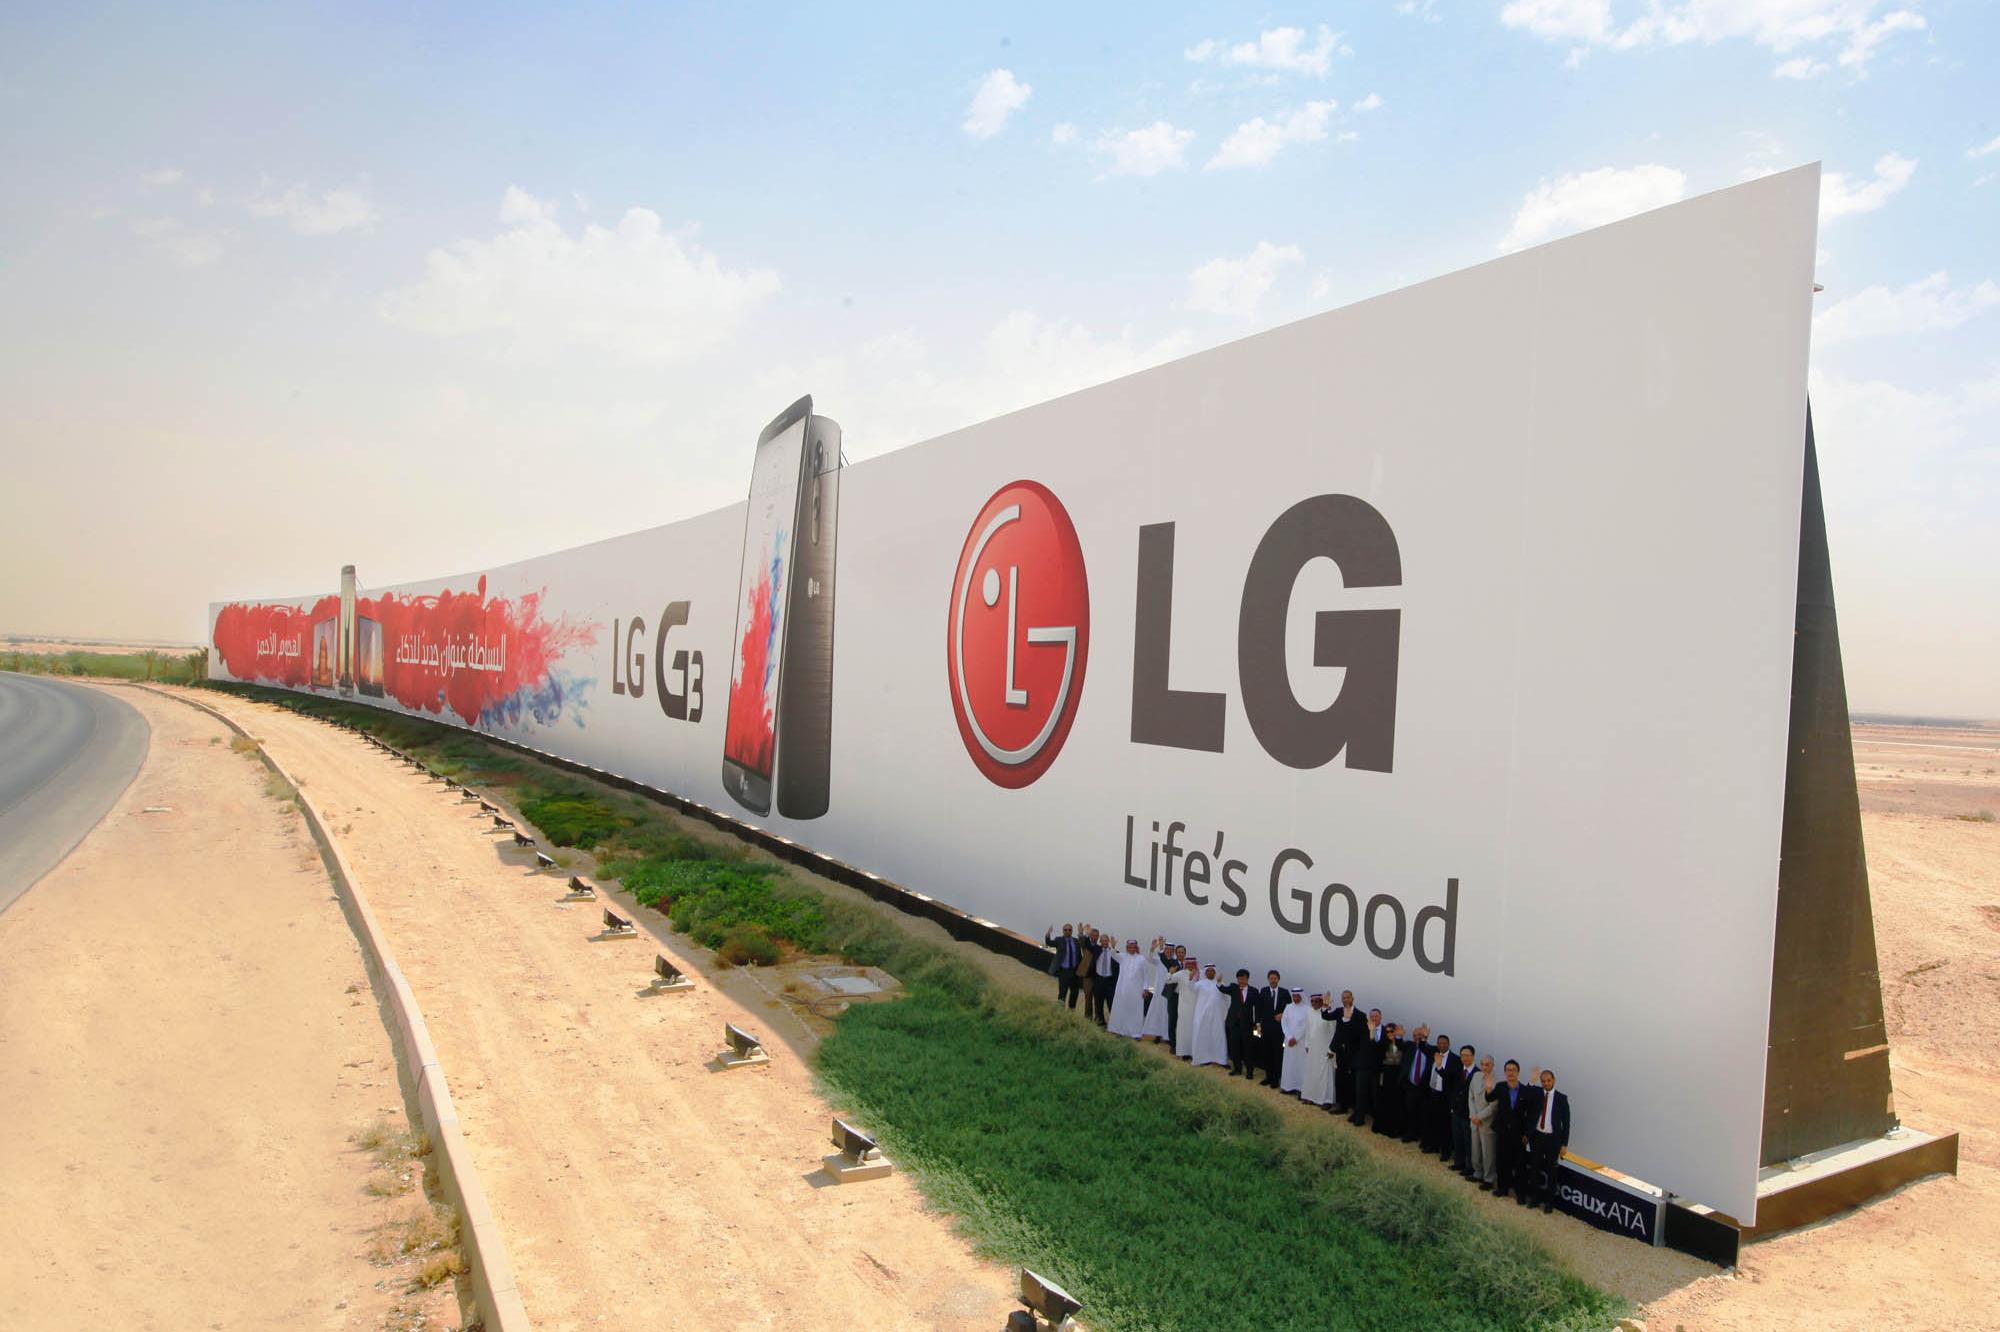 LG-G3-ad.jpg